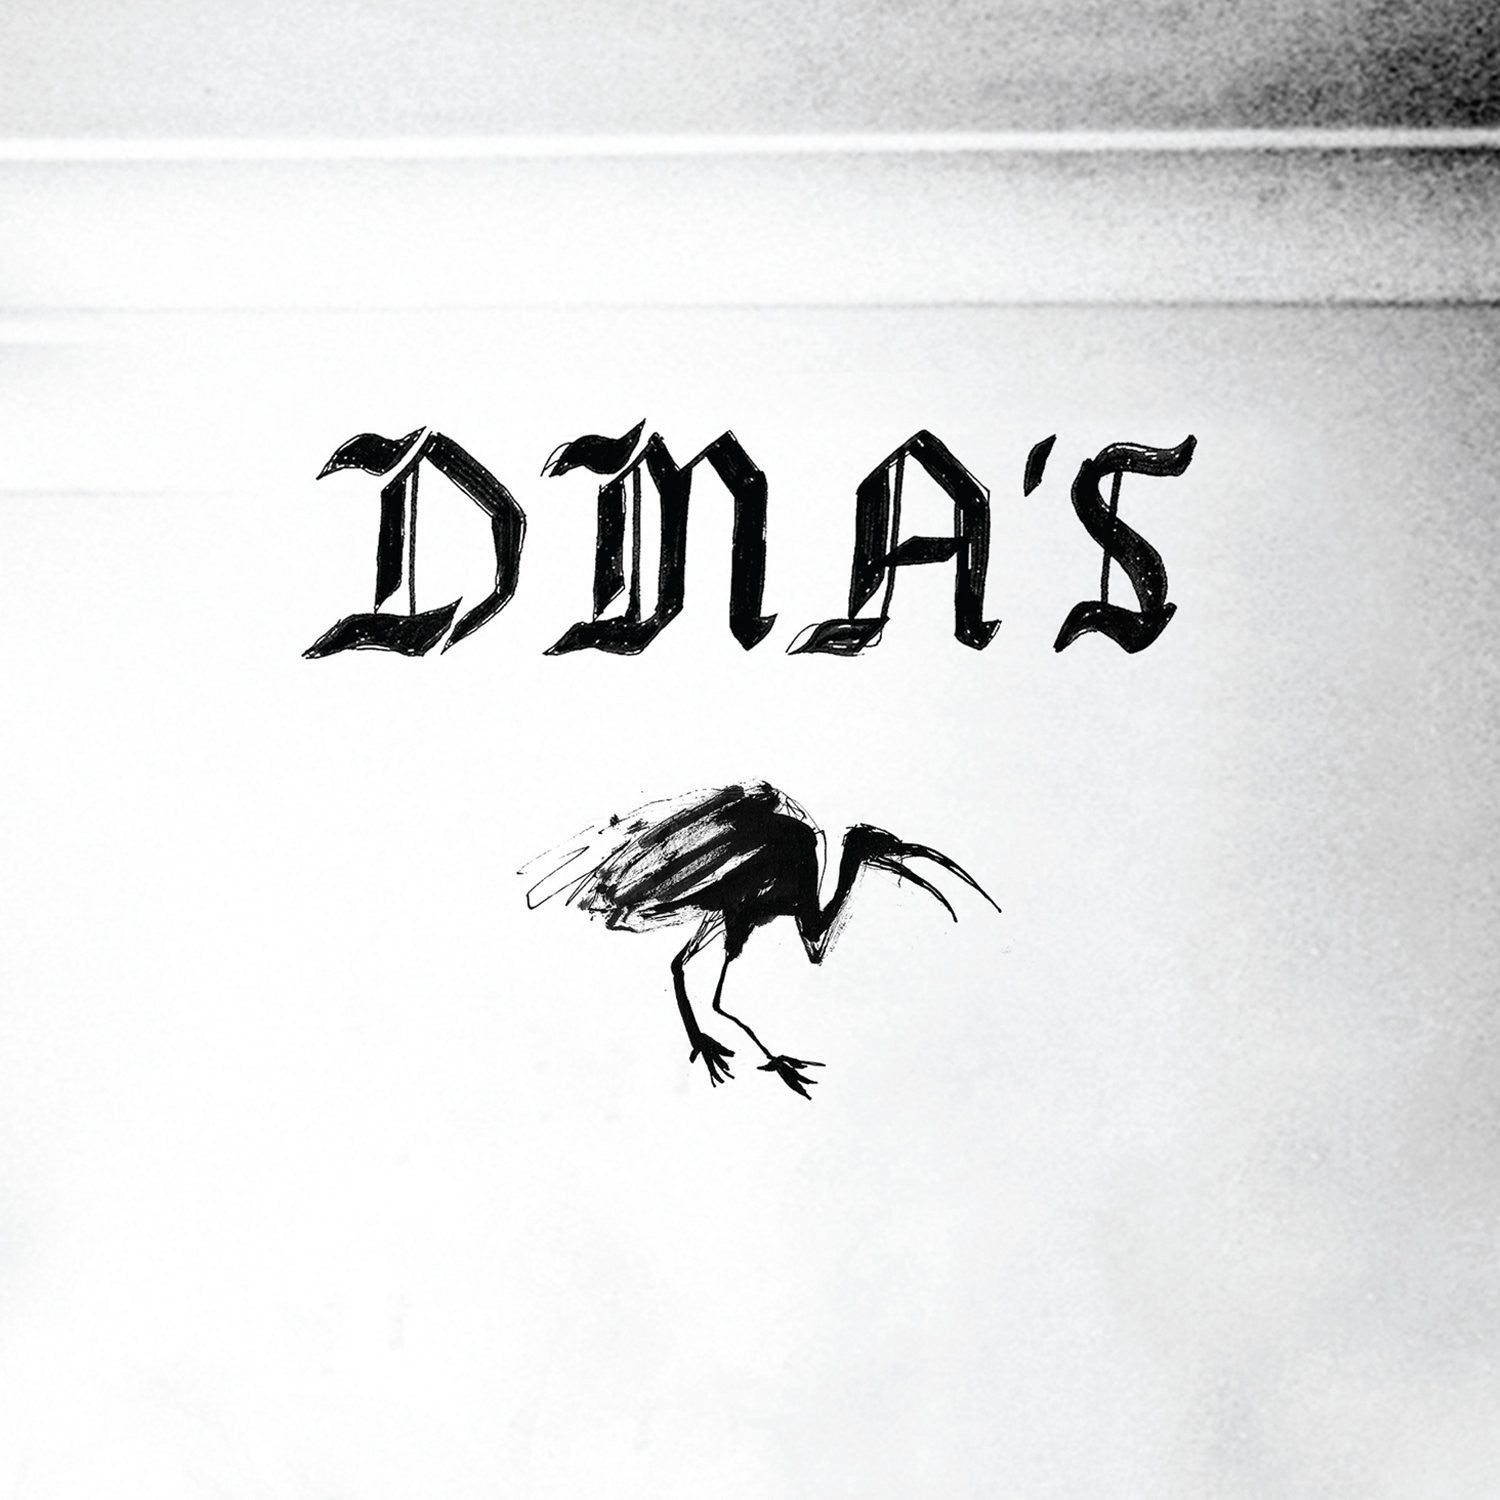 DMA's – DMA's - New EP Record 2015 Mom + Pop Vinyl & Download - Alternative Rock